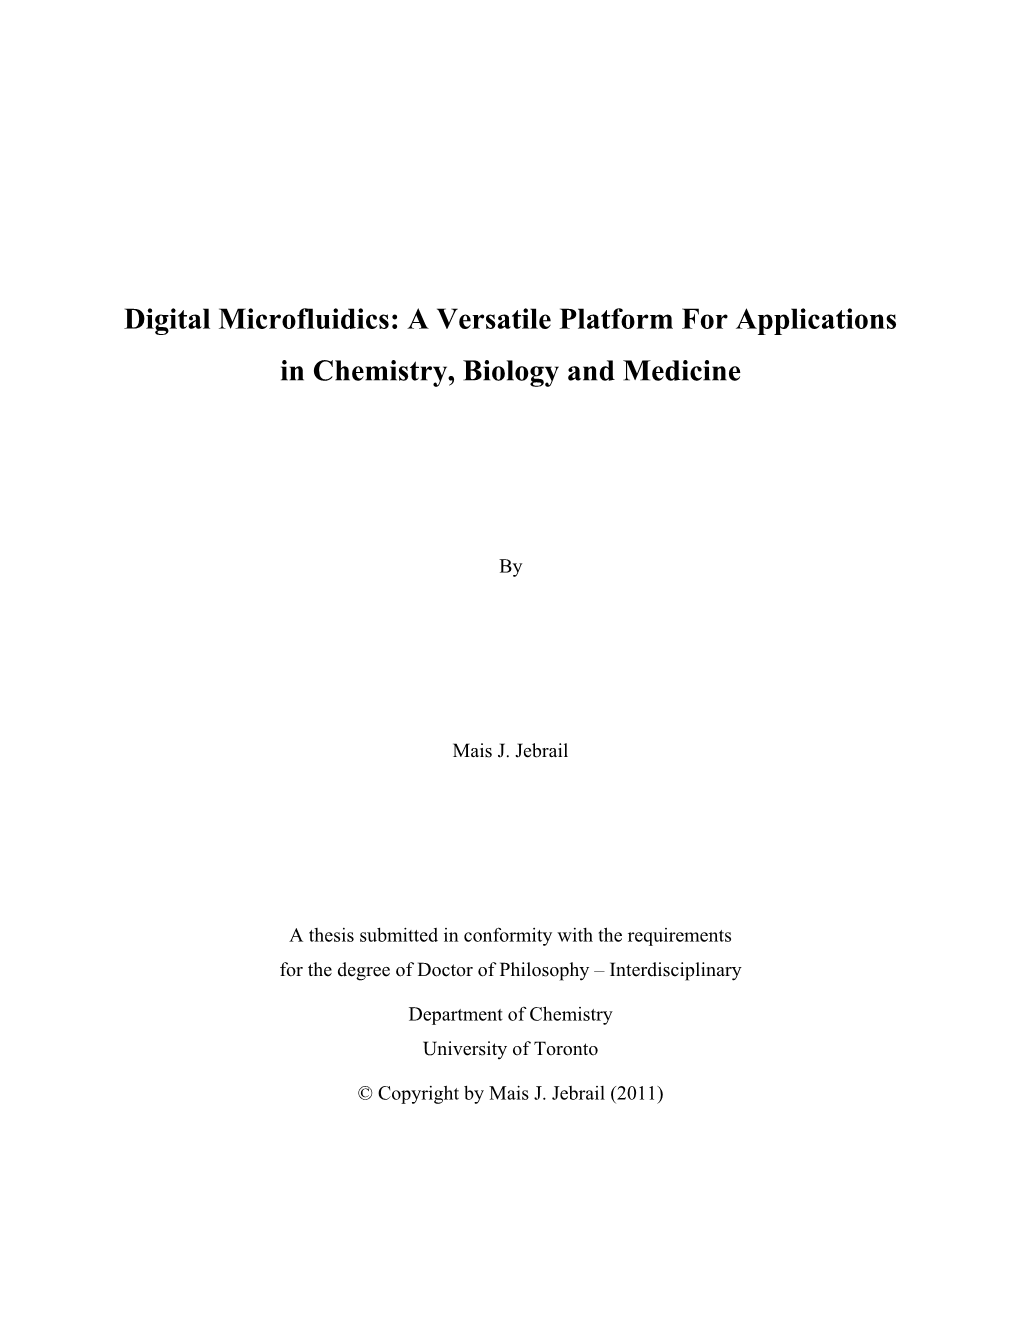 Digital Microfluidics: a Versatile Platform for Applications in Chemistry, Biology and Medicine